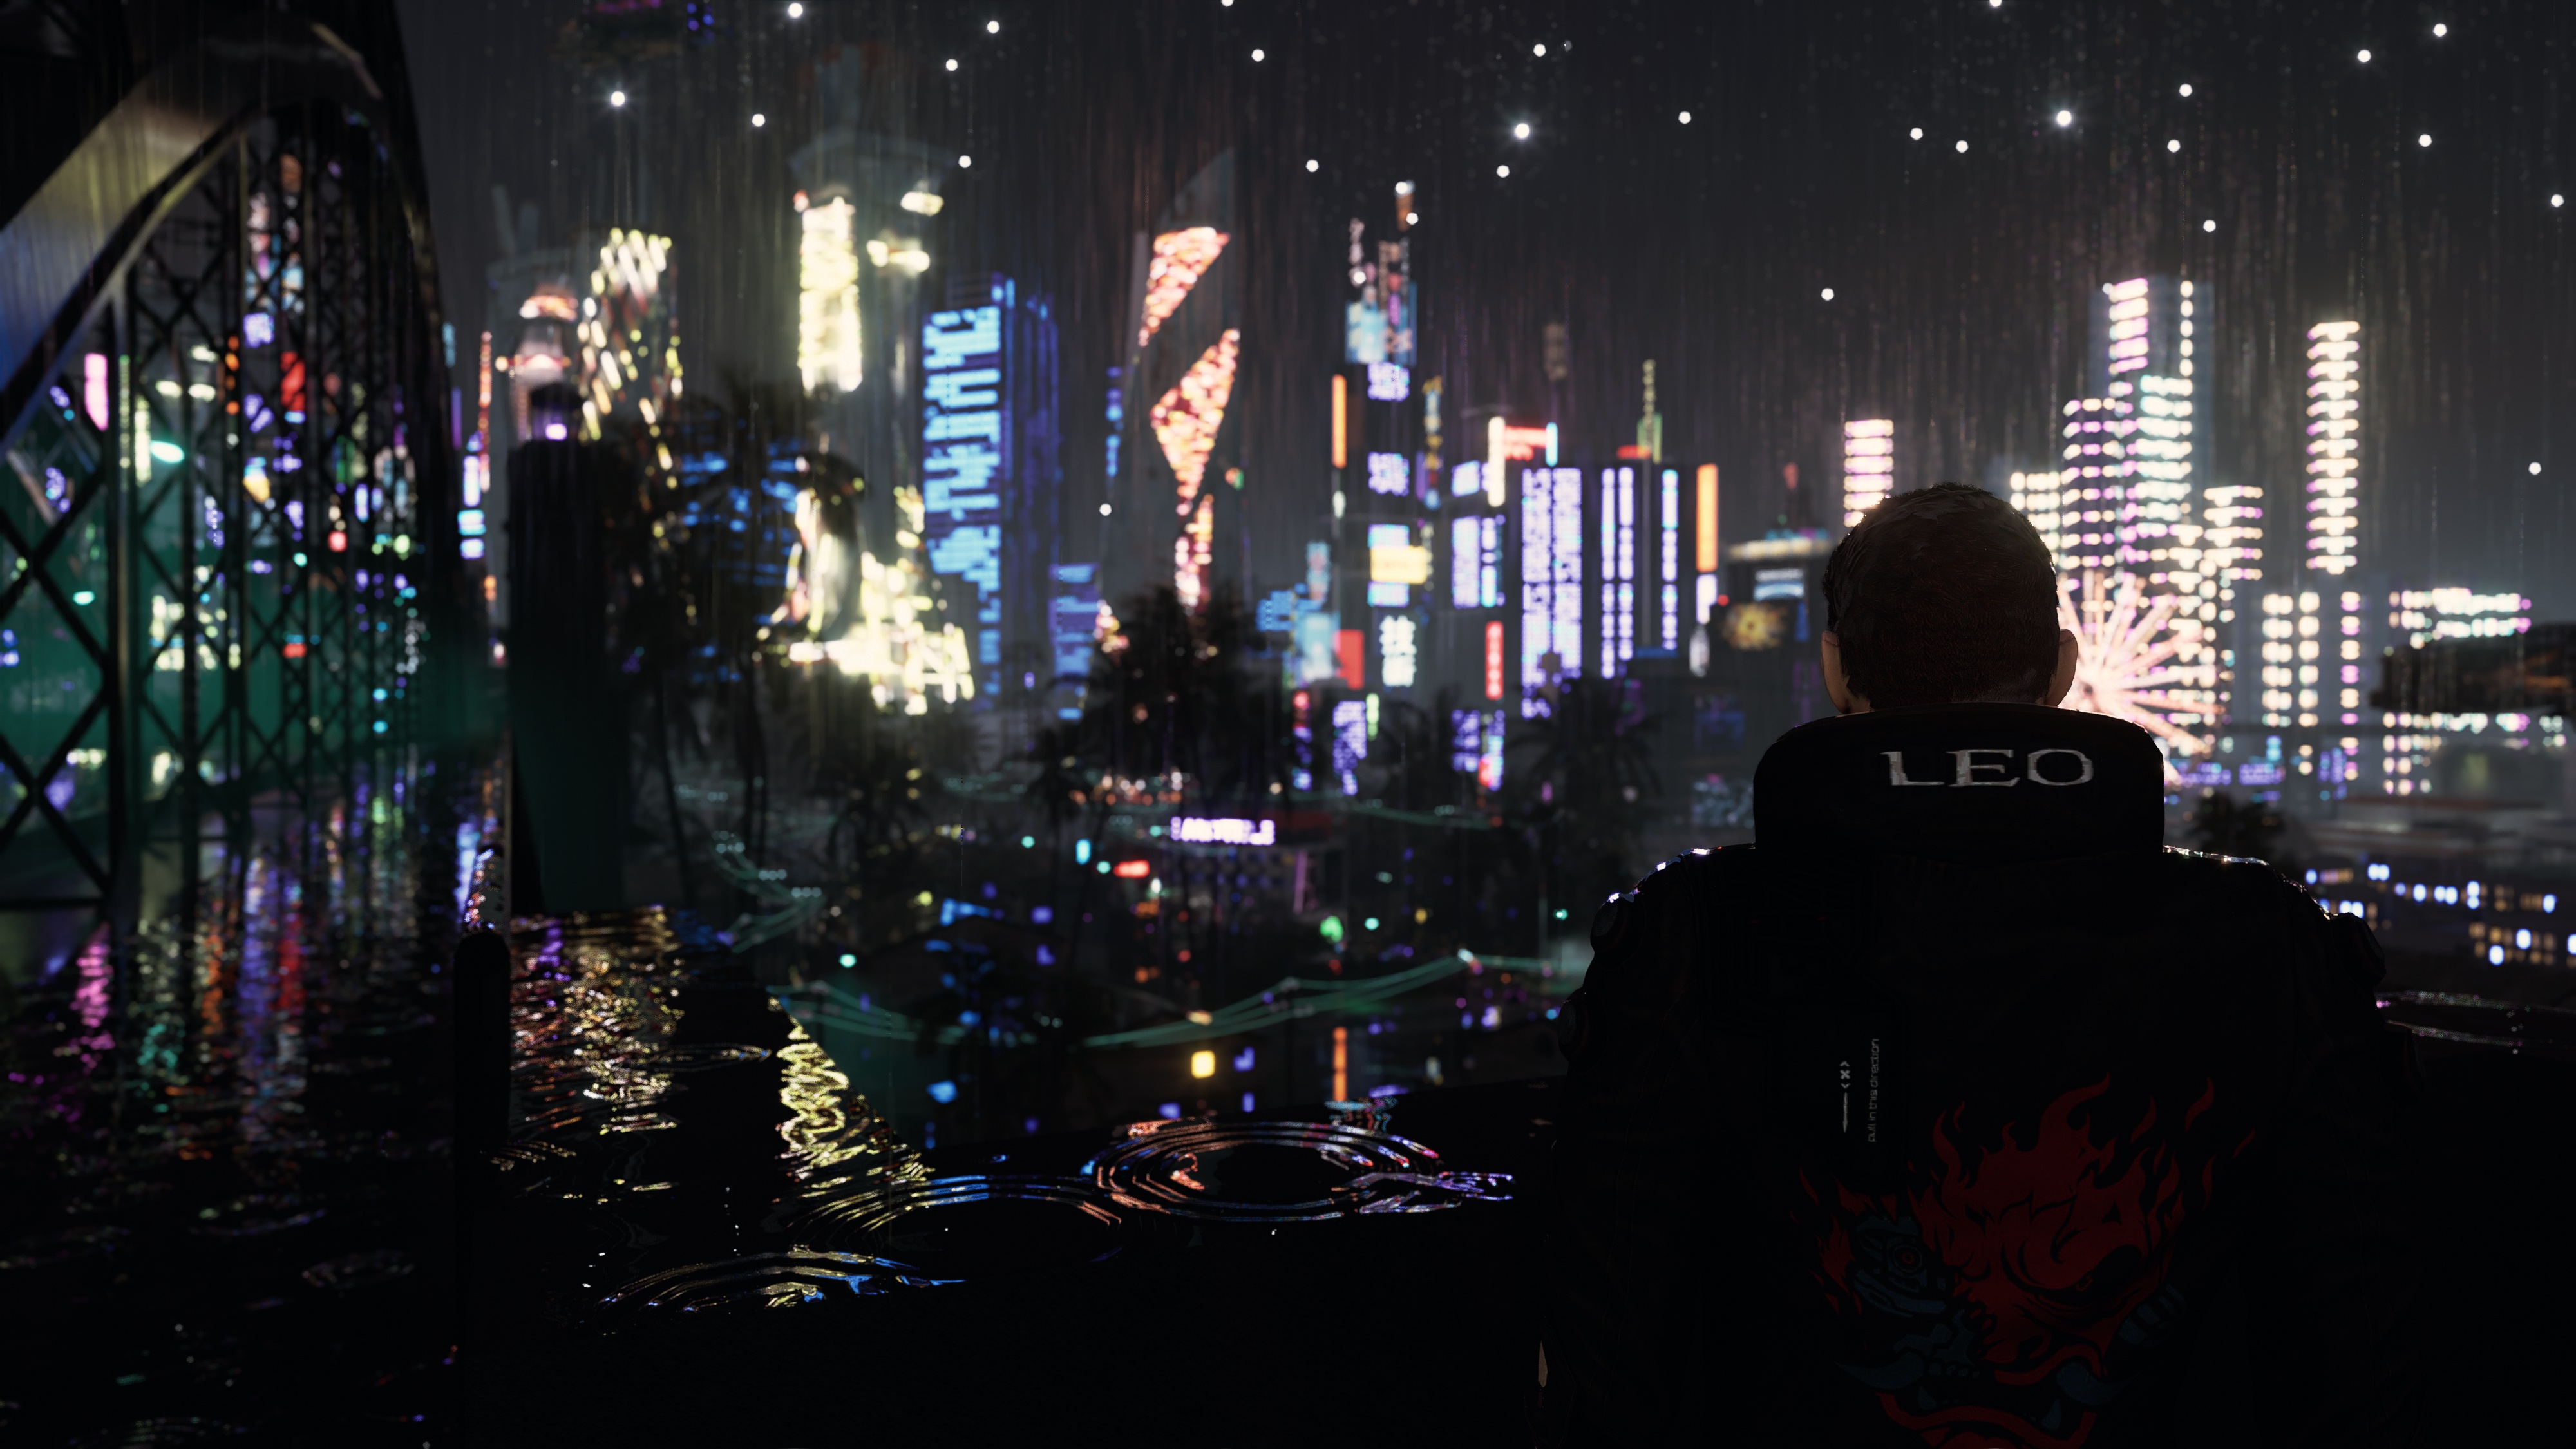 Cyberpunk Night City - Gallery - D5 RENDER FORUM